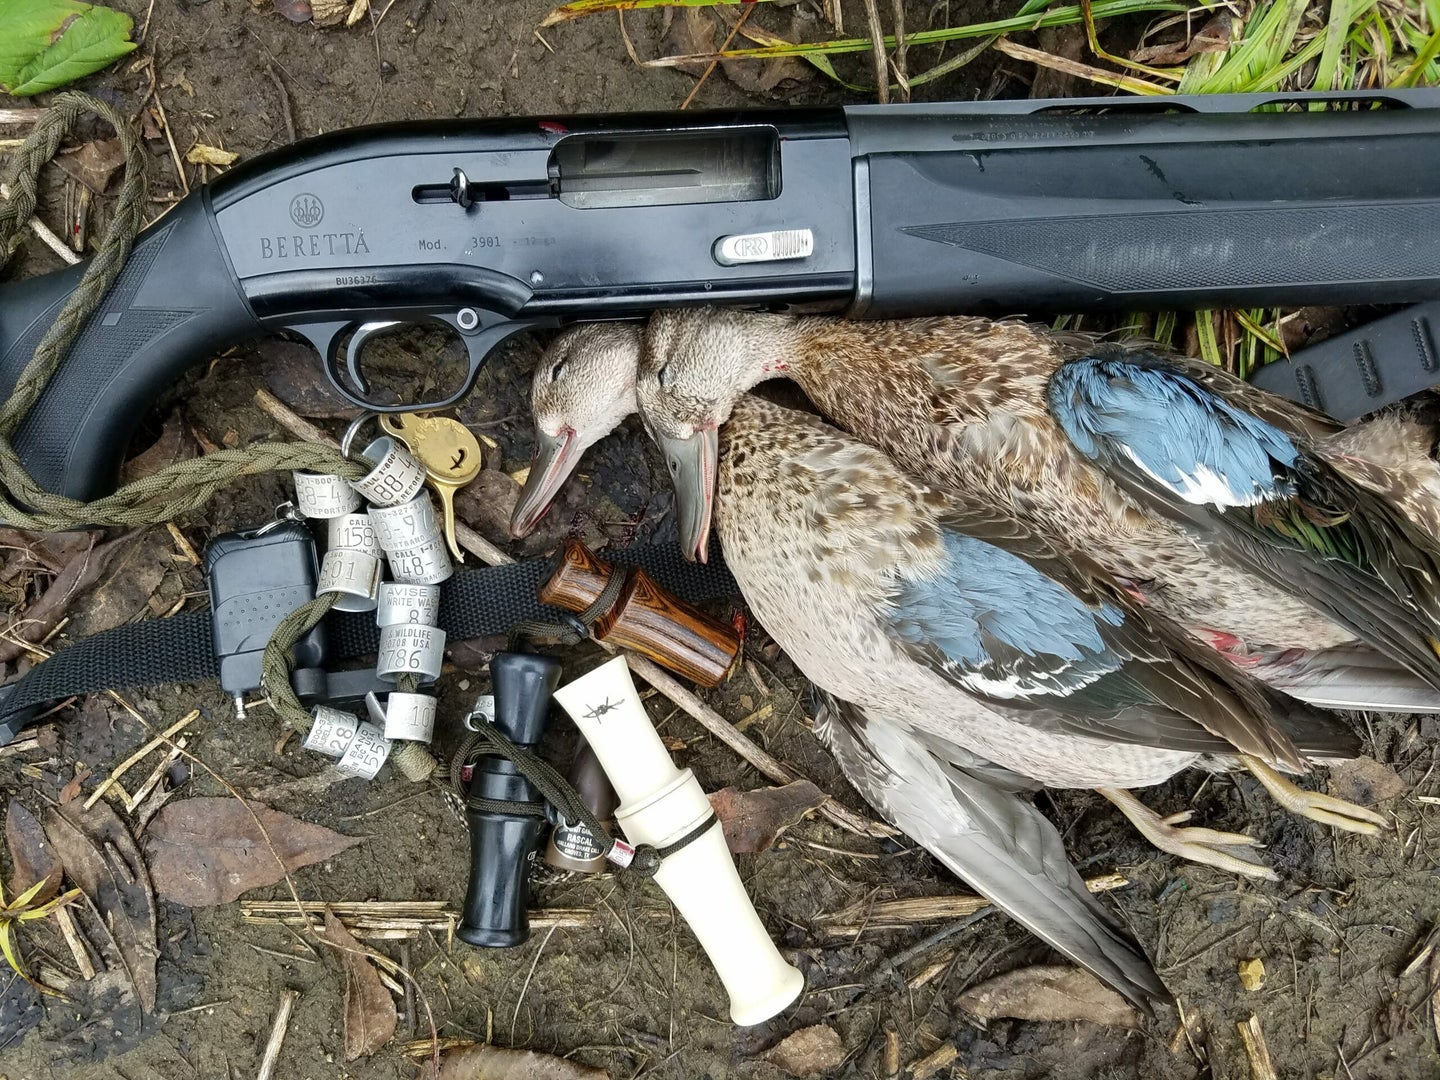 Dead bluewing teal next to a shotgun.